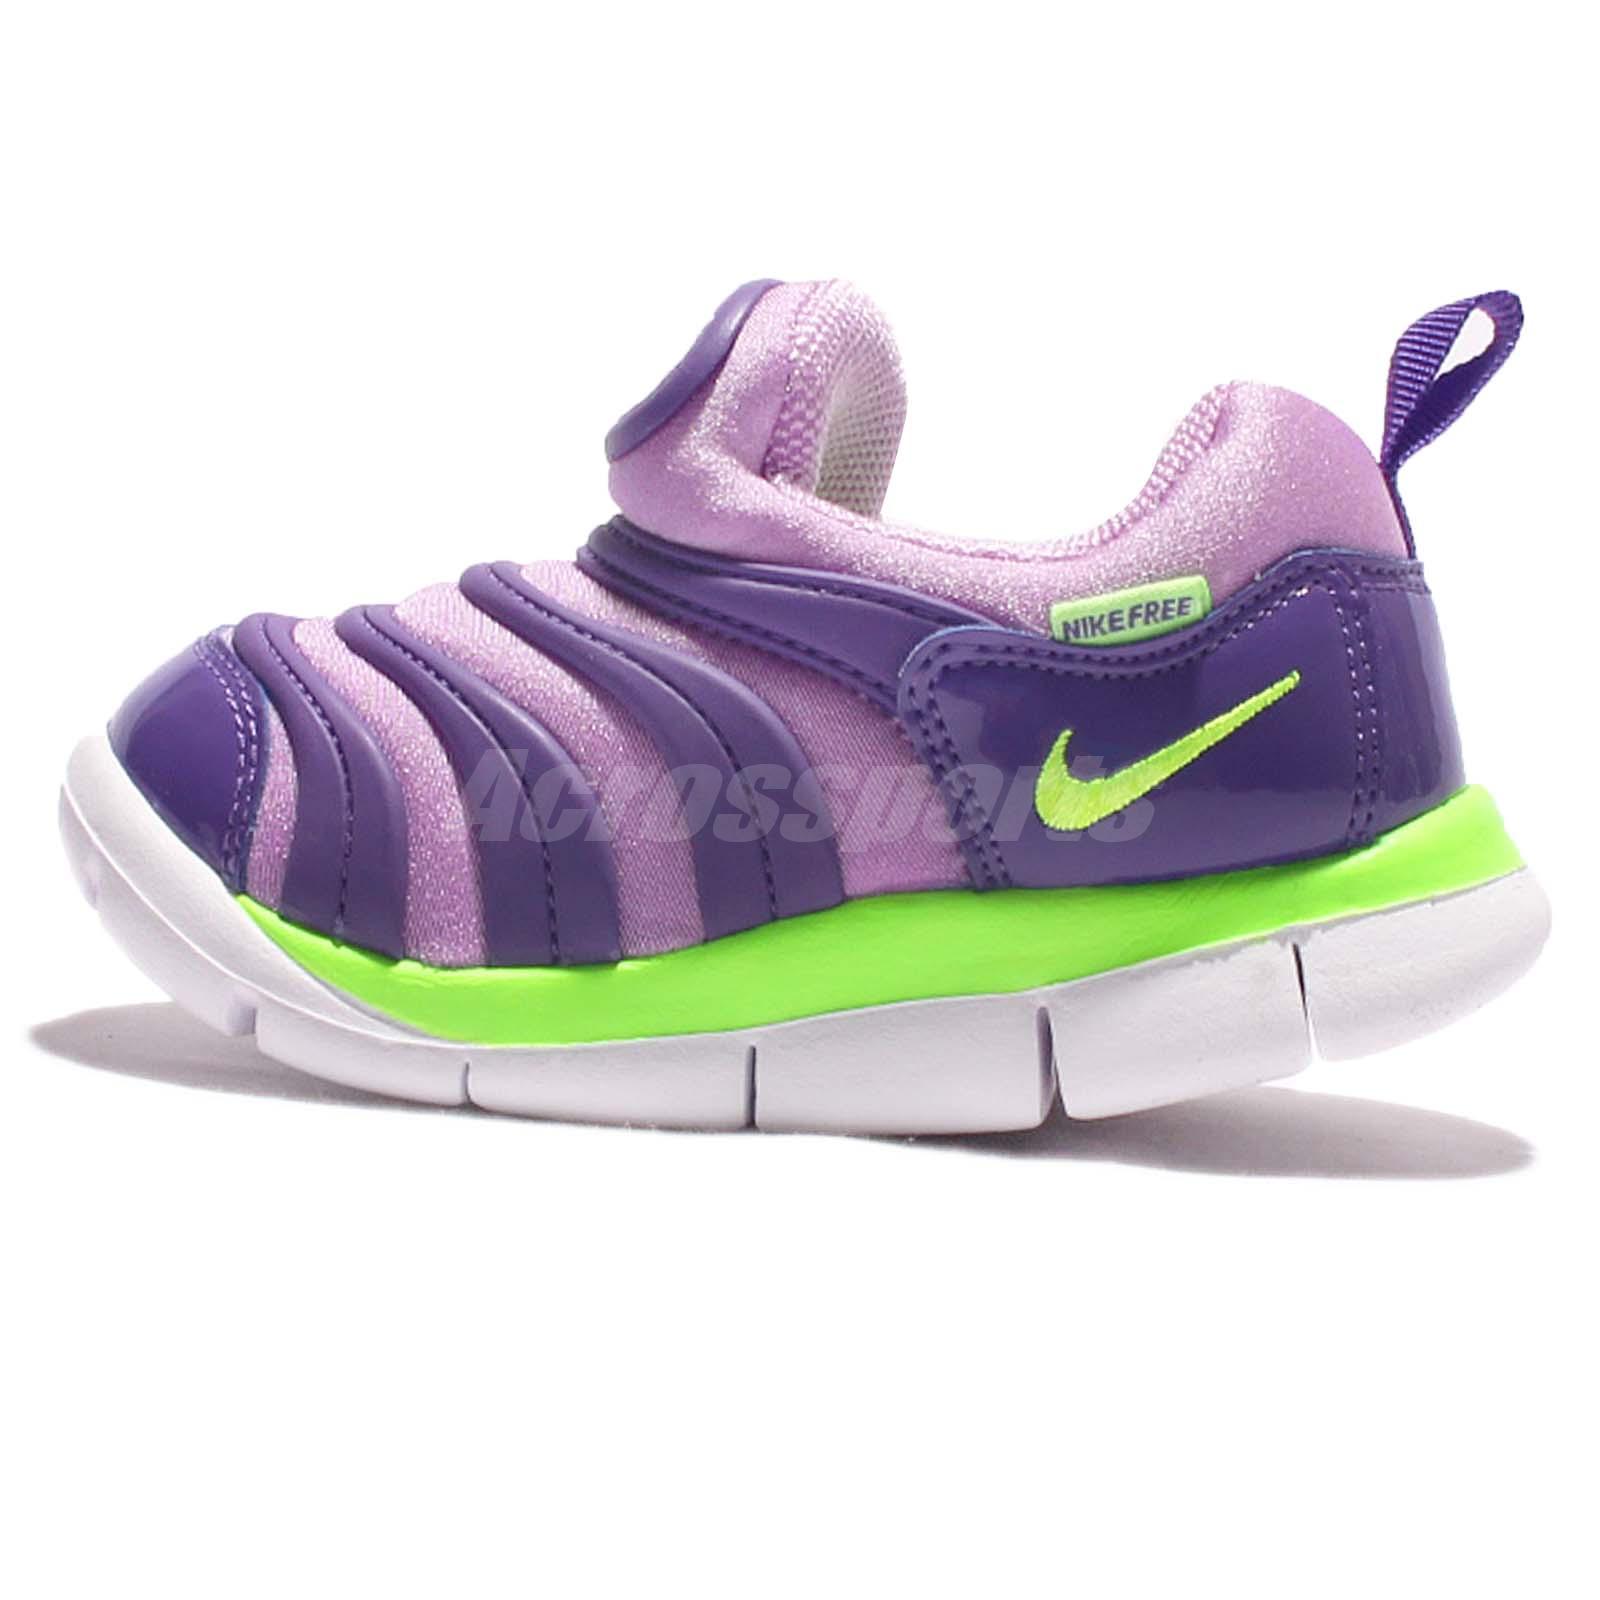 nike dynamo free hk, Nike Dynamo Free TD Purple Green Toddler Infant Baby Running Shoes 343938-505